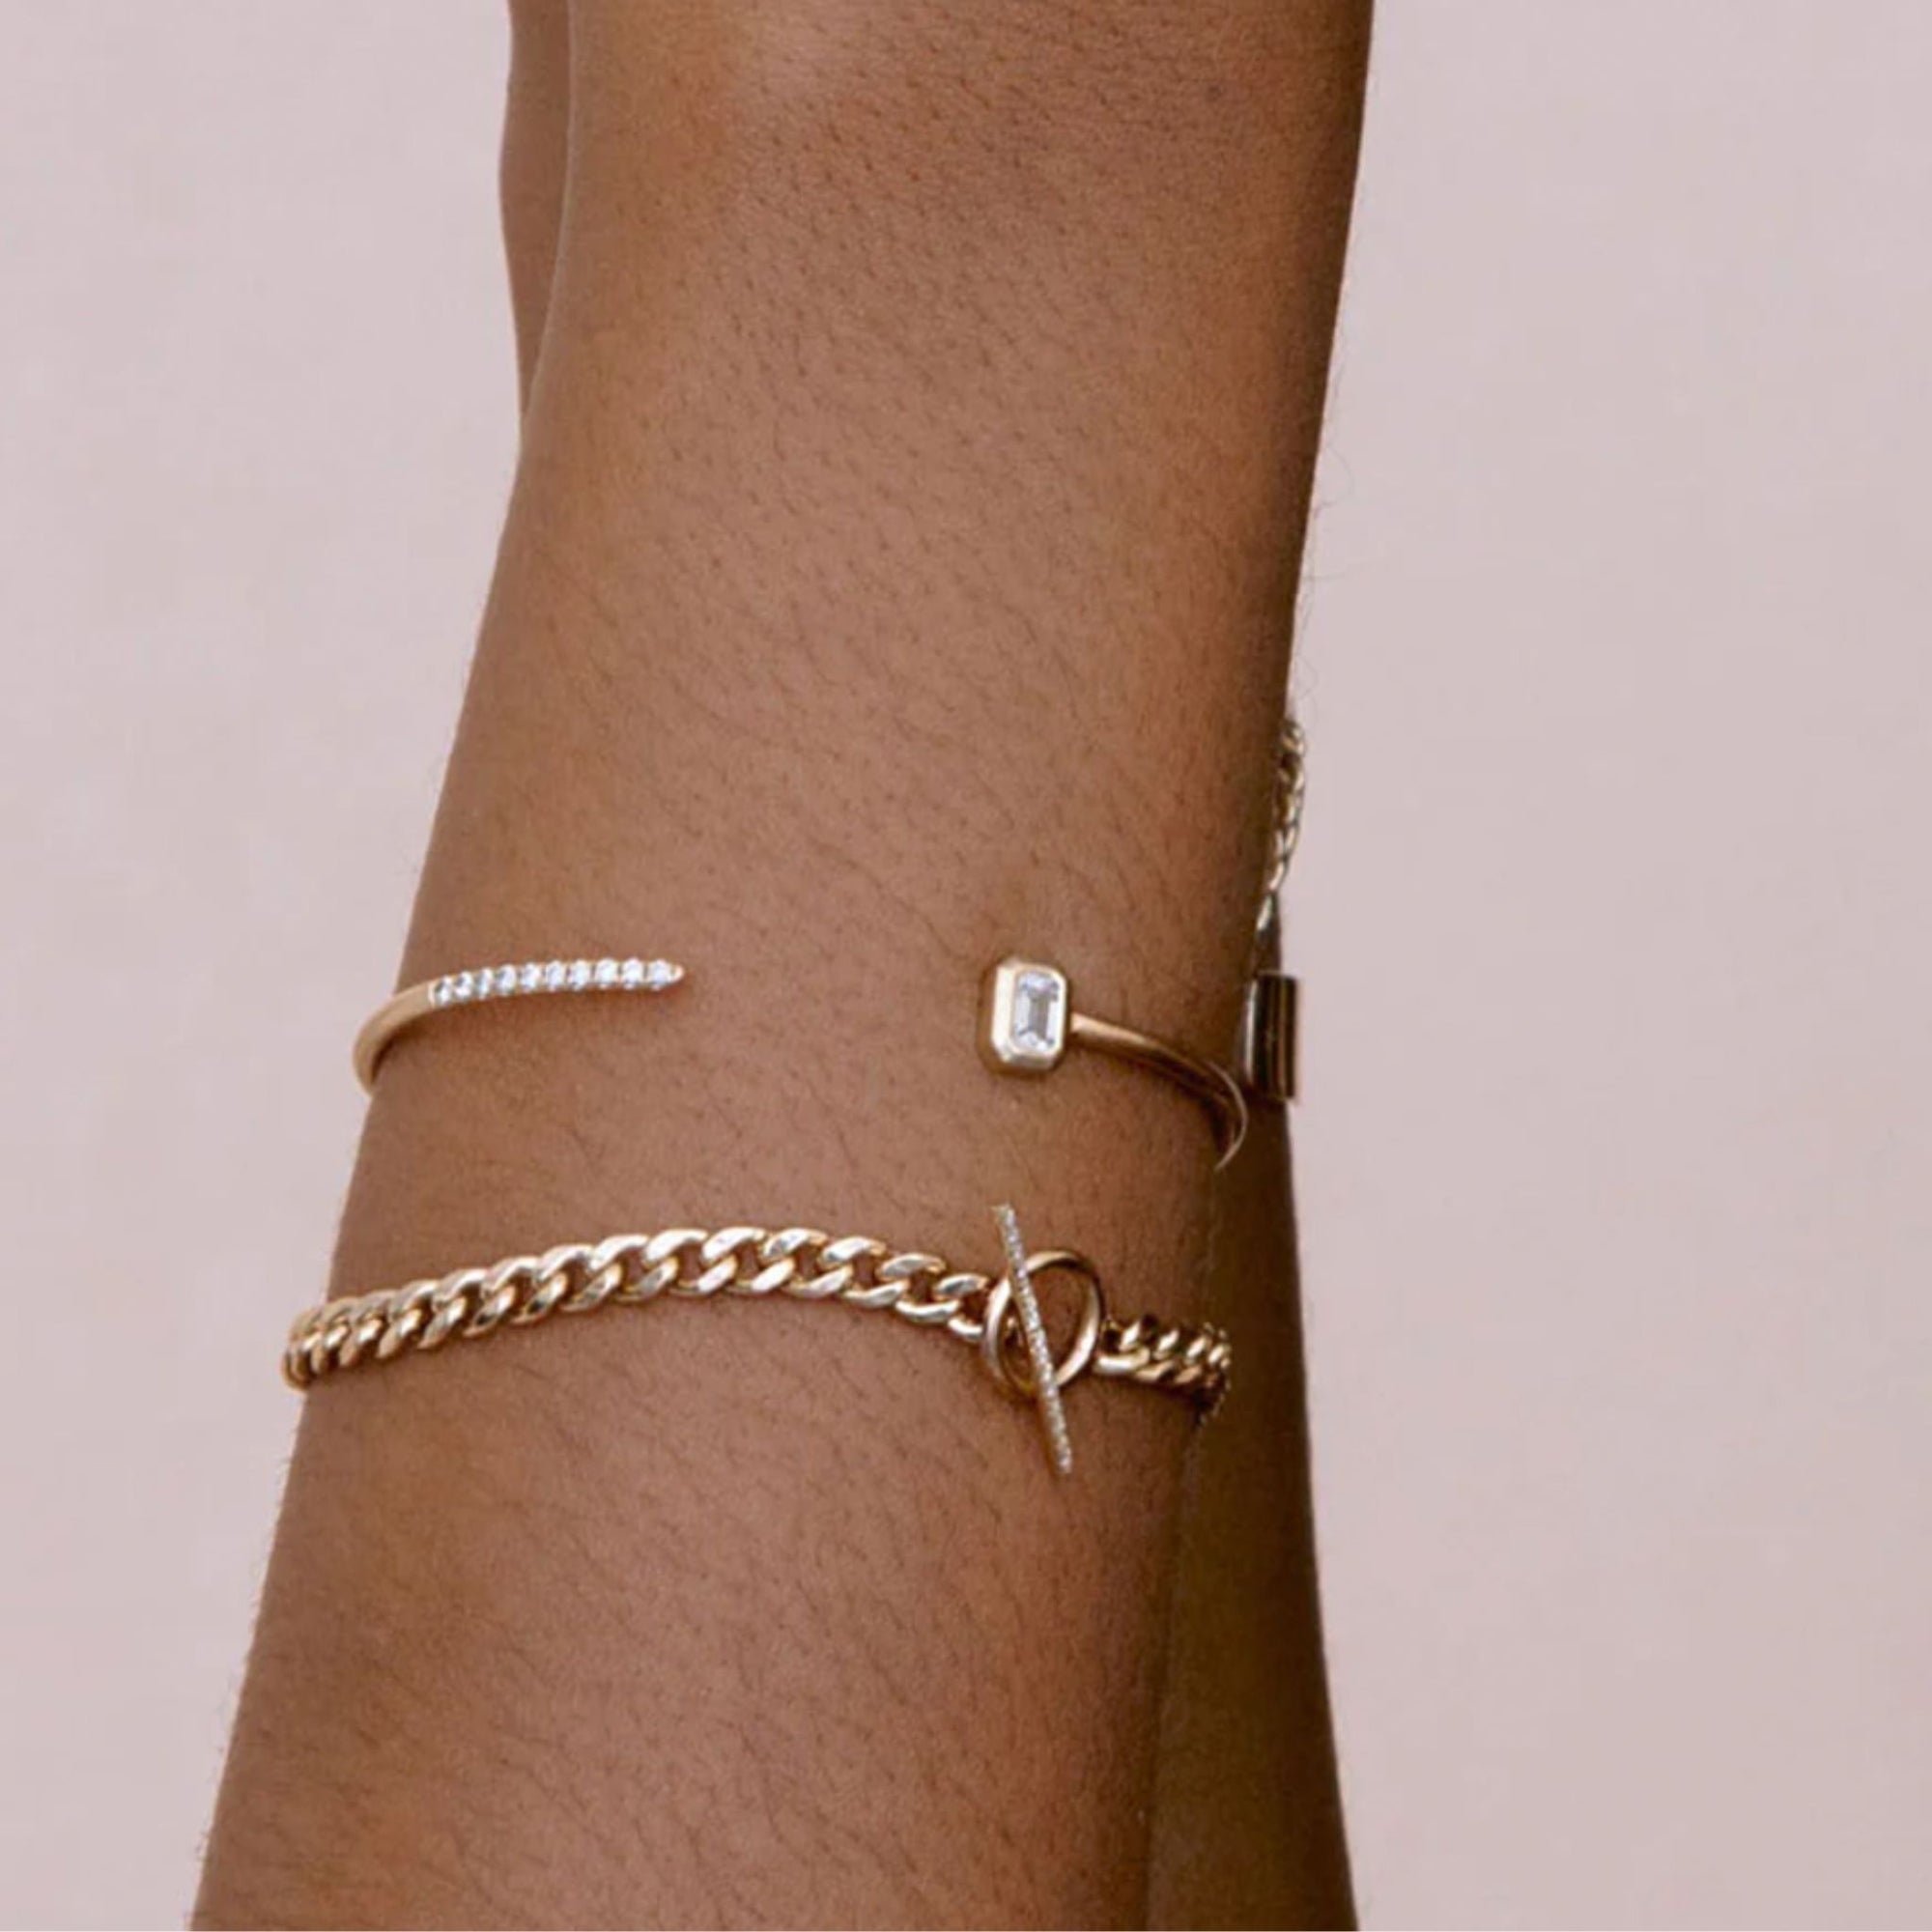 Zoe Chicco 14k Medium Curb Chain Pave Diamond Toggle Bracelet